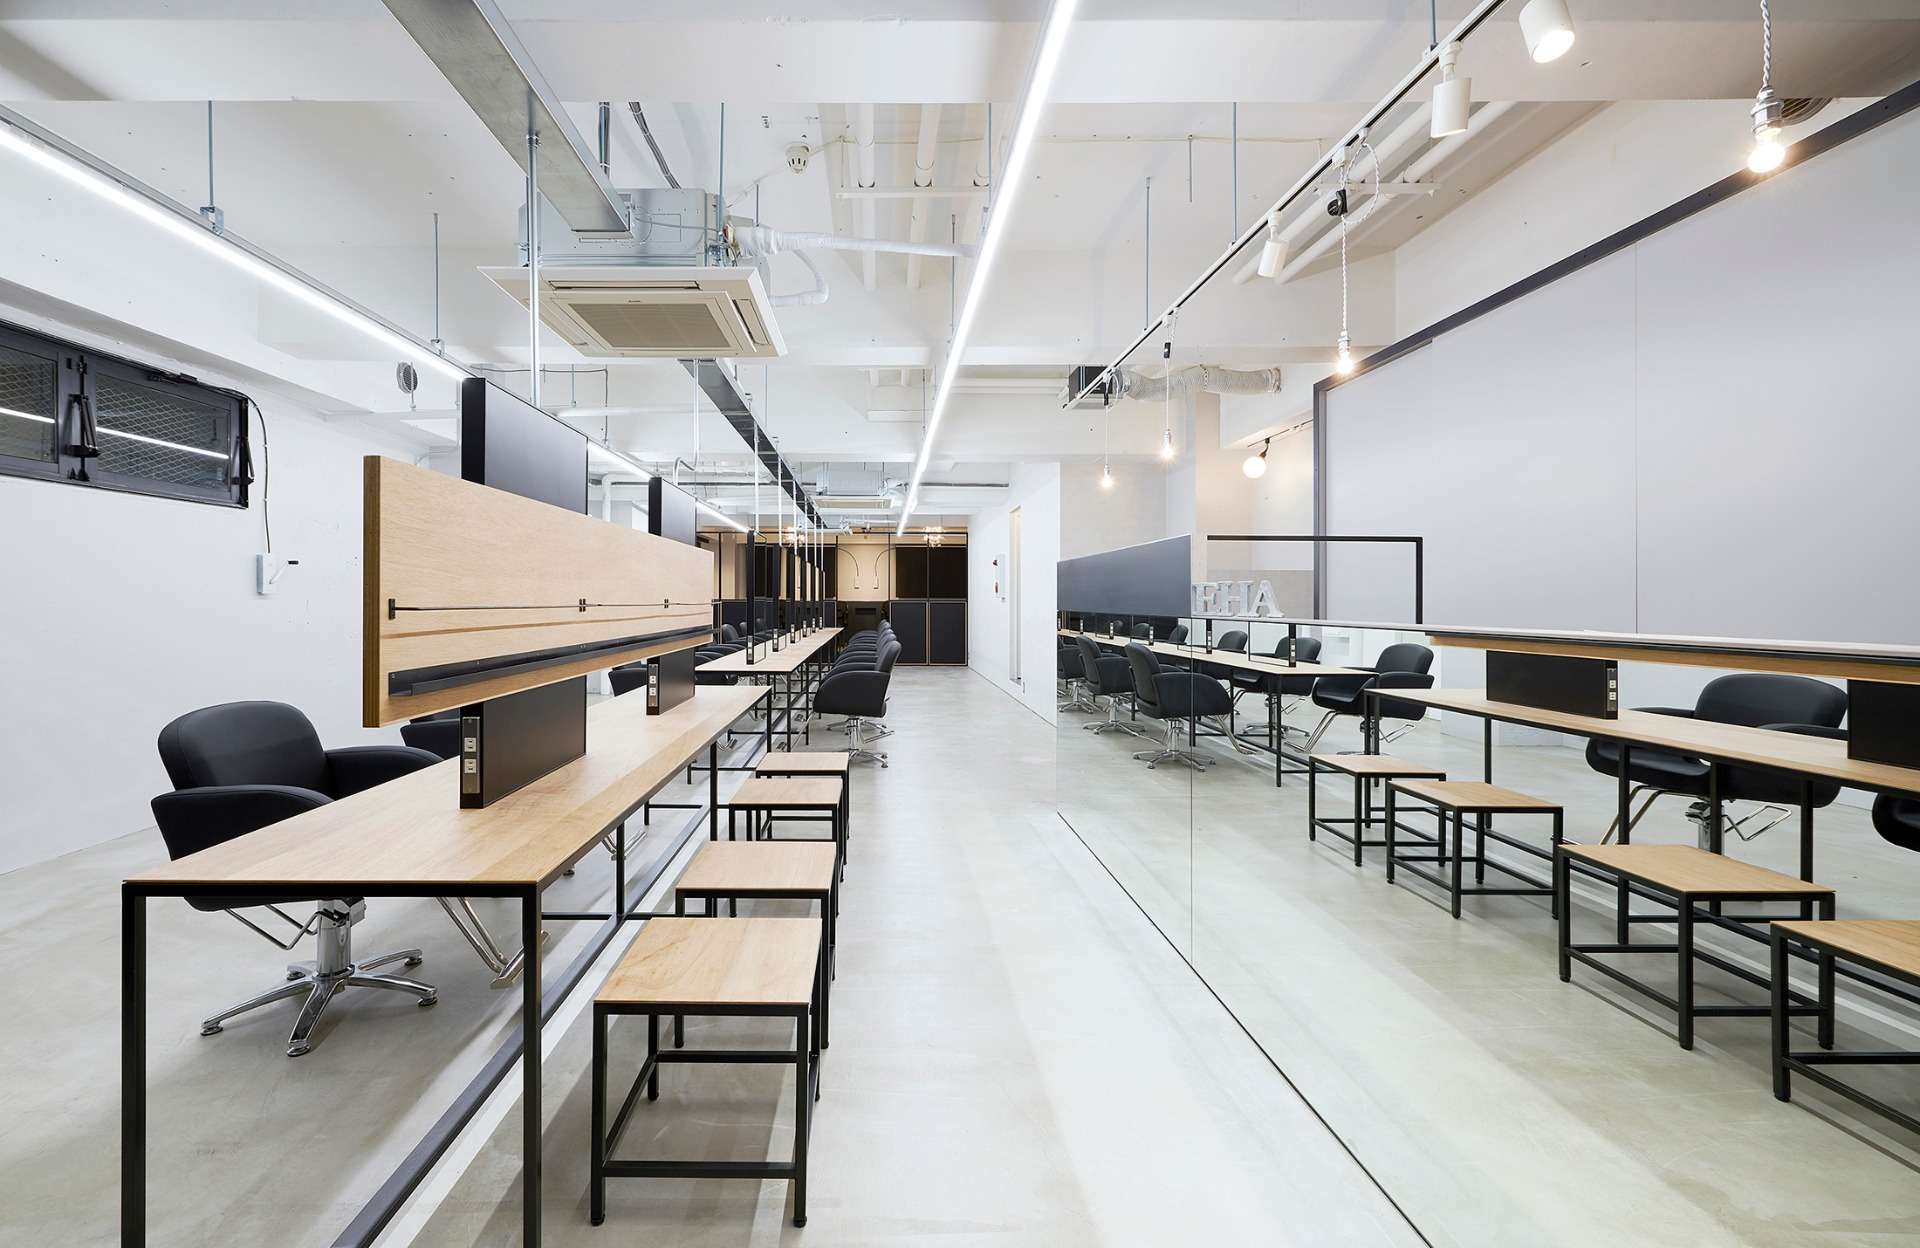 asazu design officeは注文住宅だけでなく店舗のデザインも得意とする設計事務所です。